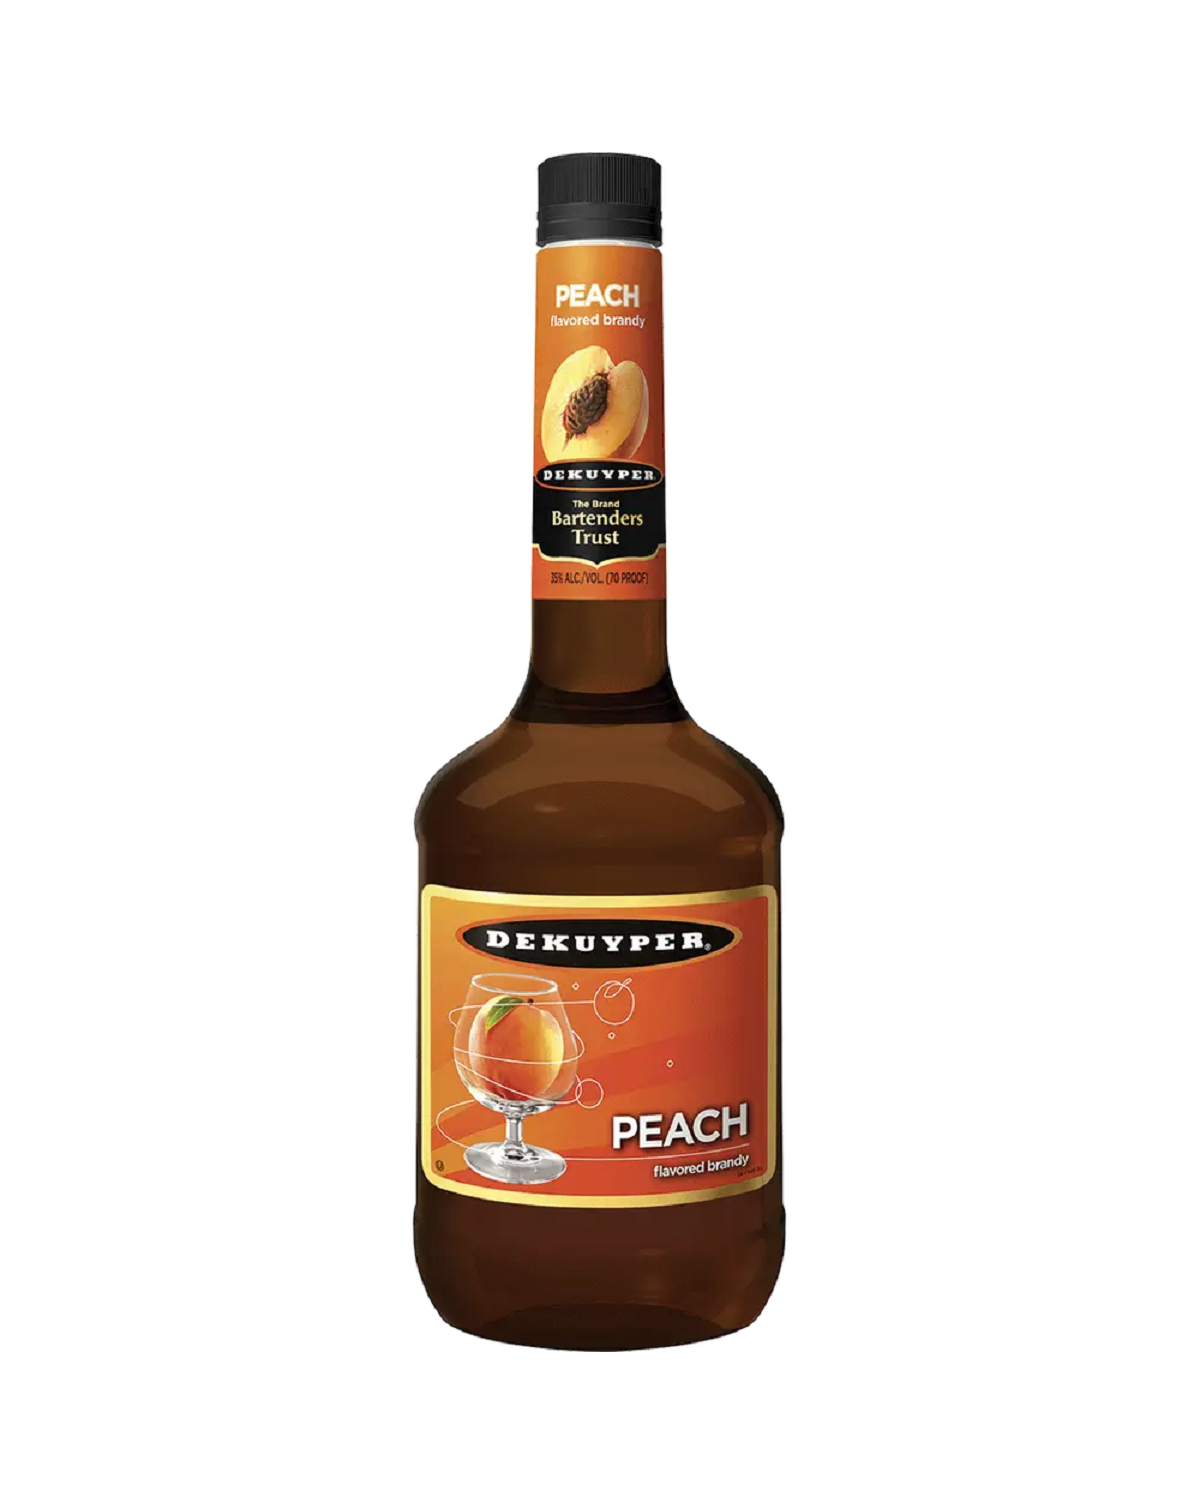 Dekuyper Peach Flavored Brandy 750ML